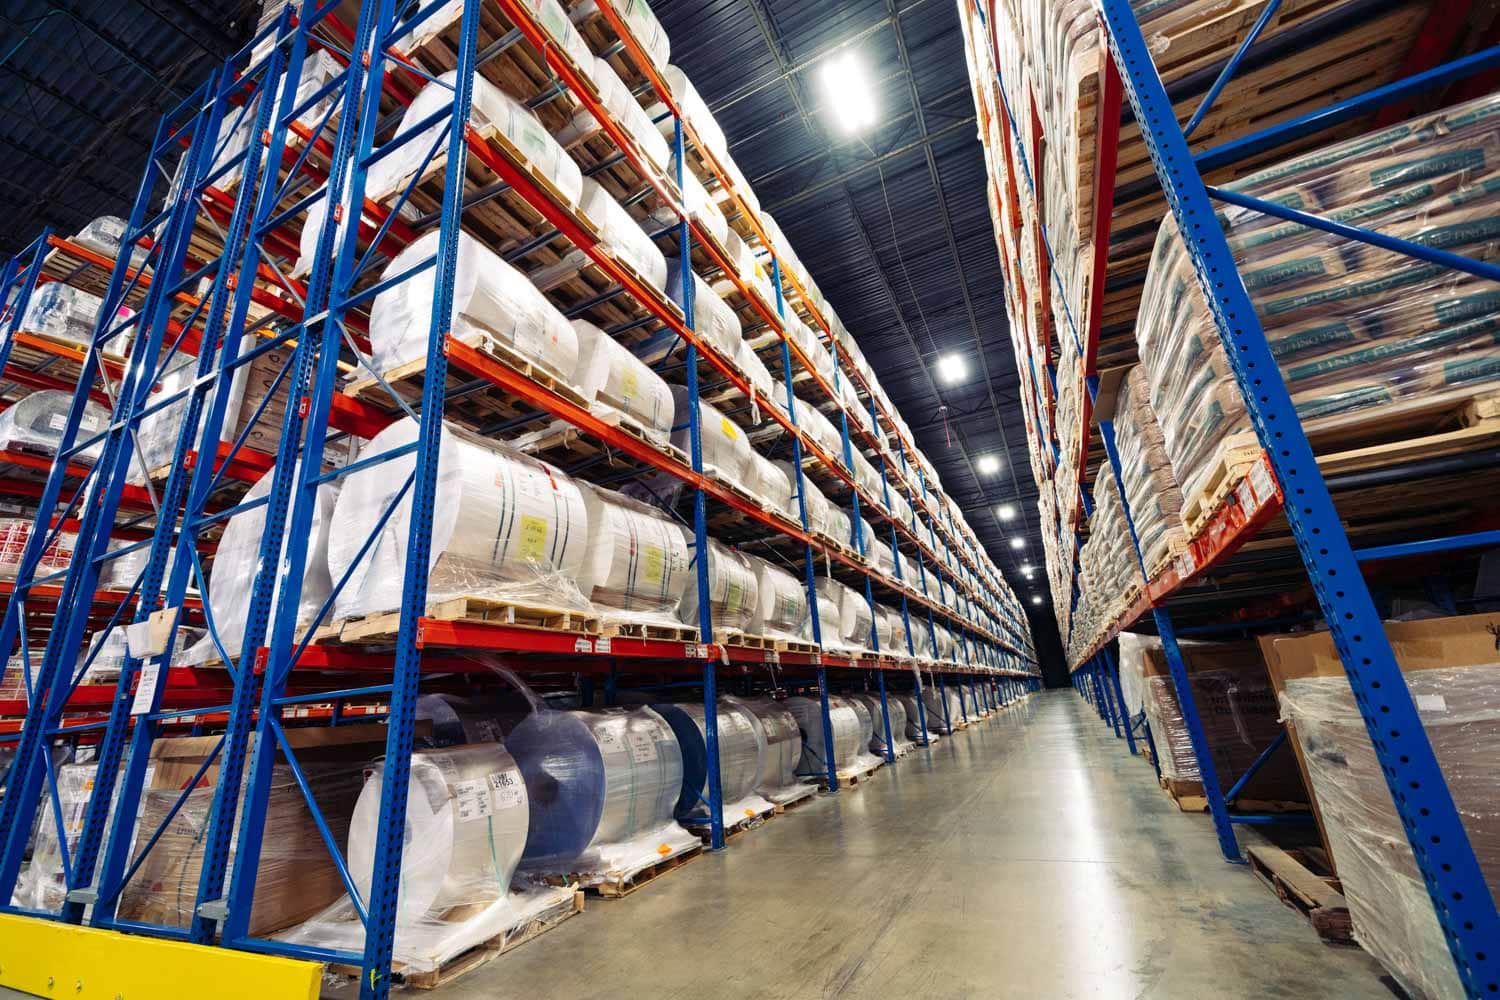 north carolina warehousing space - shelves stacked full